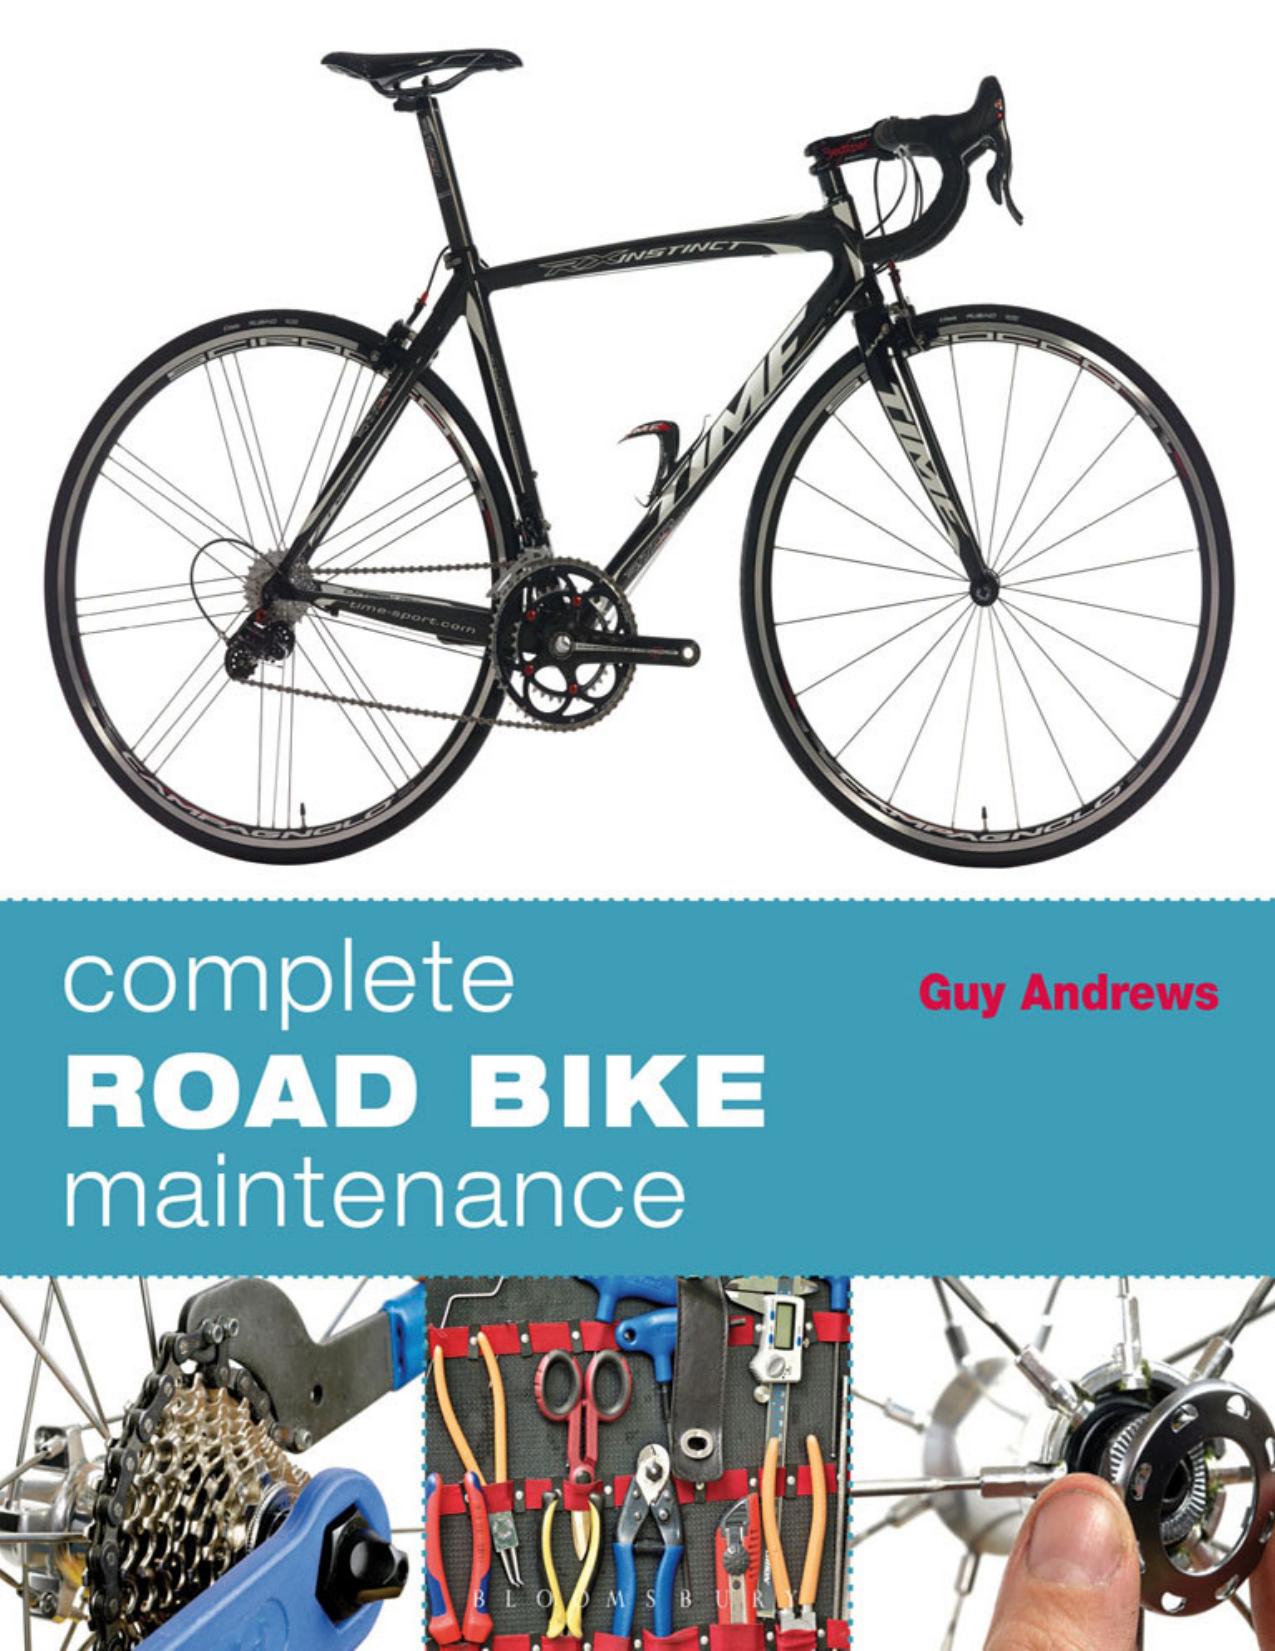 Complete Road Bike Maintenance by Guy Andrews